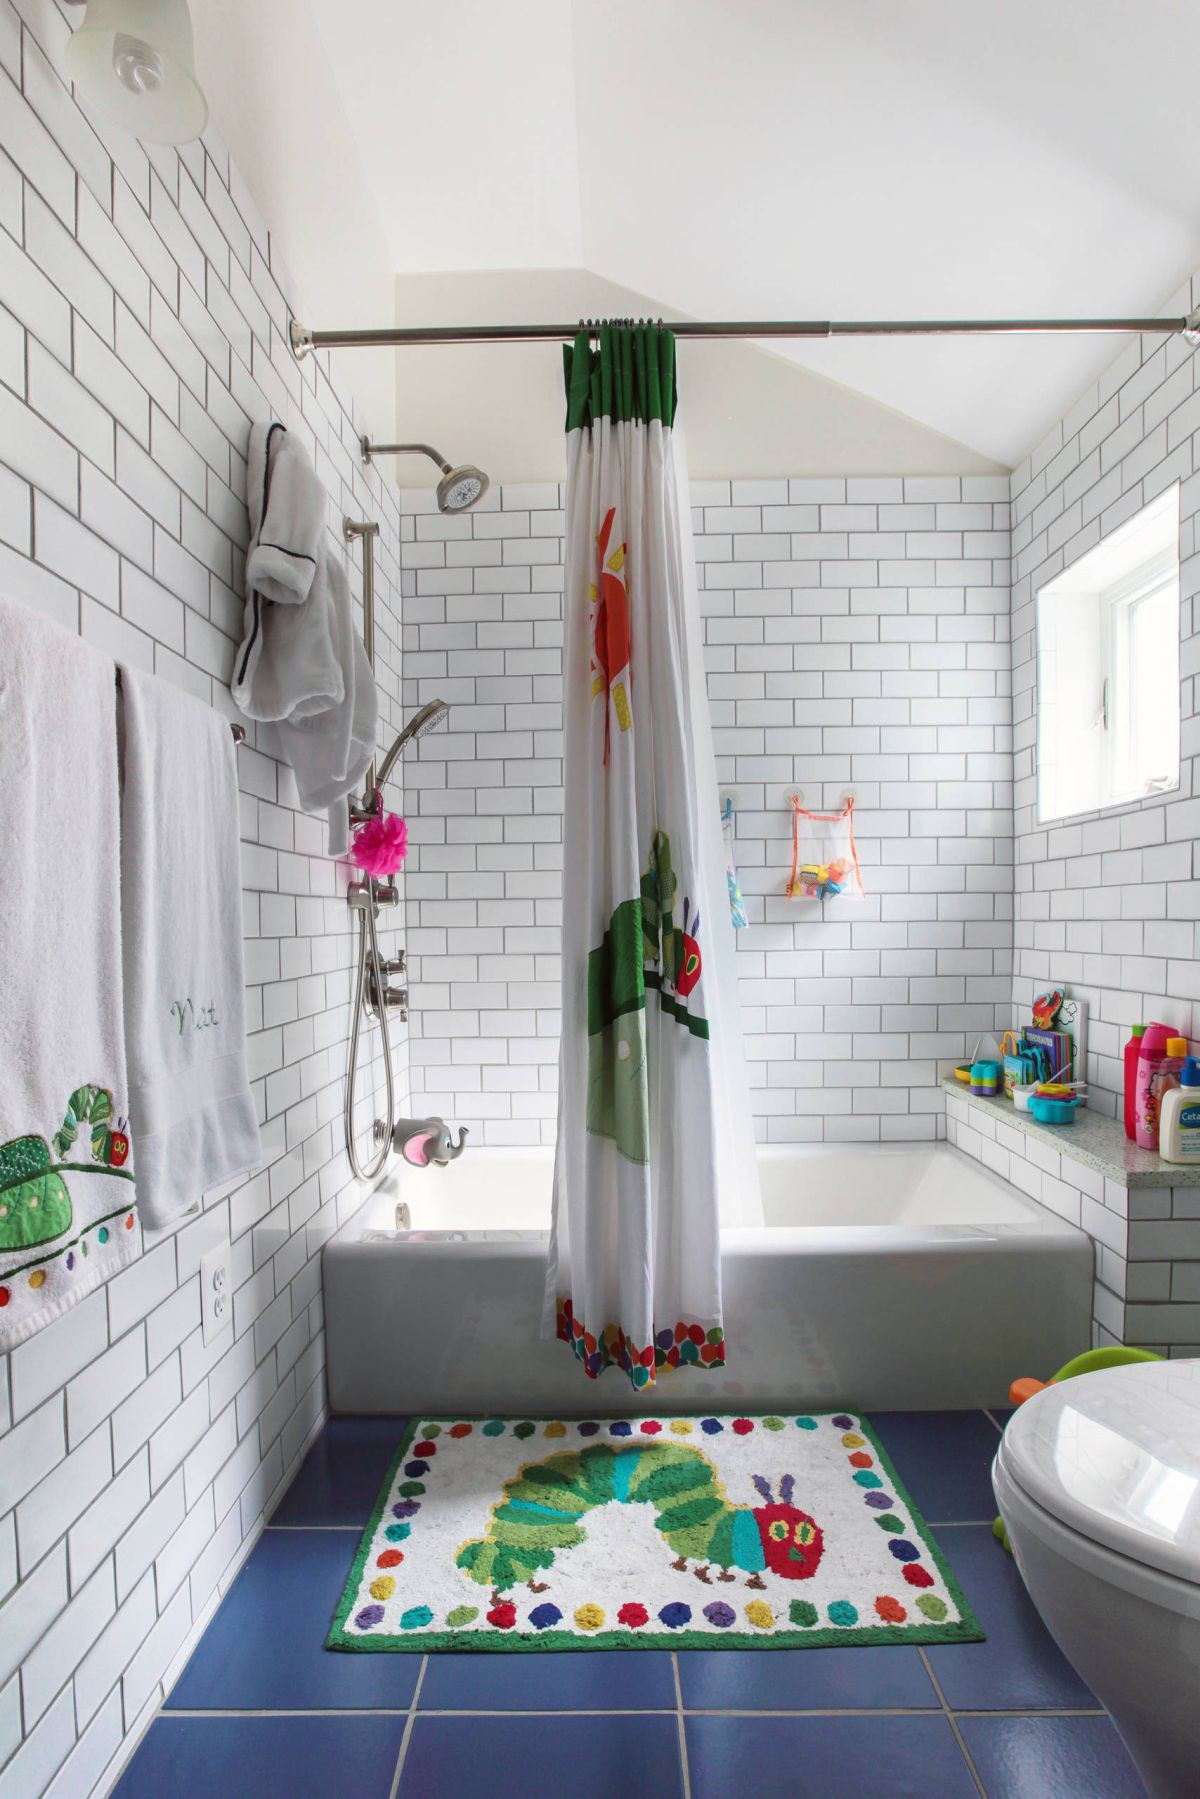 Kid Bathroom Decoration
 12 Tips for The Best Kids Bathroom Decor